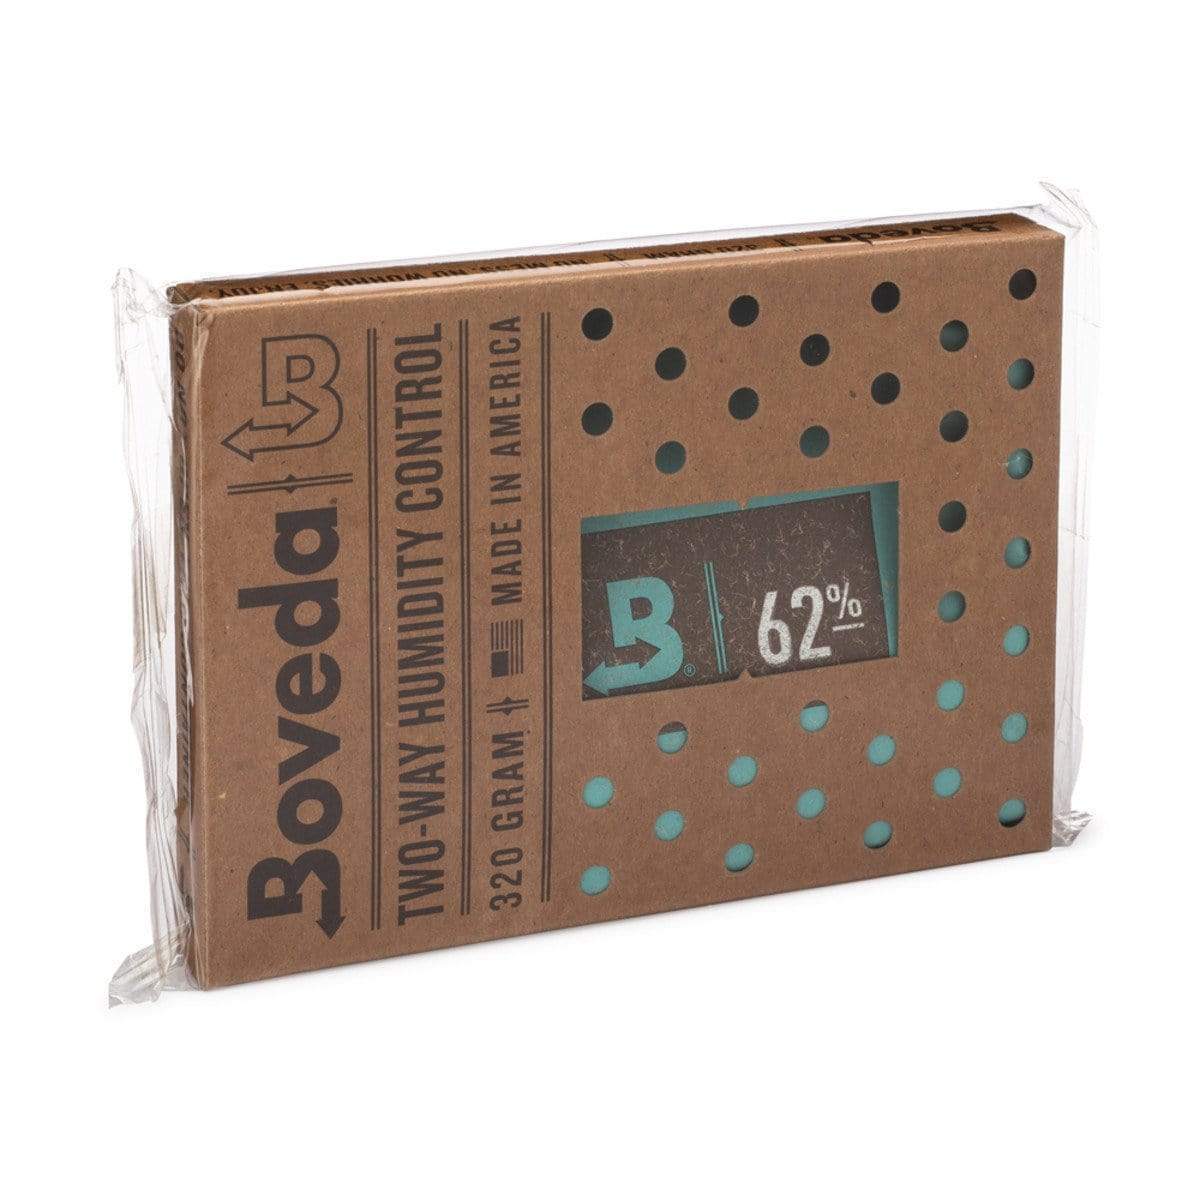 Single Pack 62% RH Boveda Humidity Control Pack | 320 gram